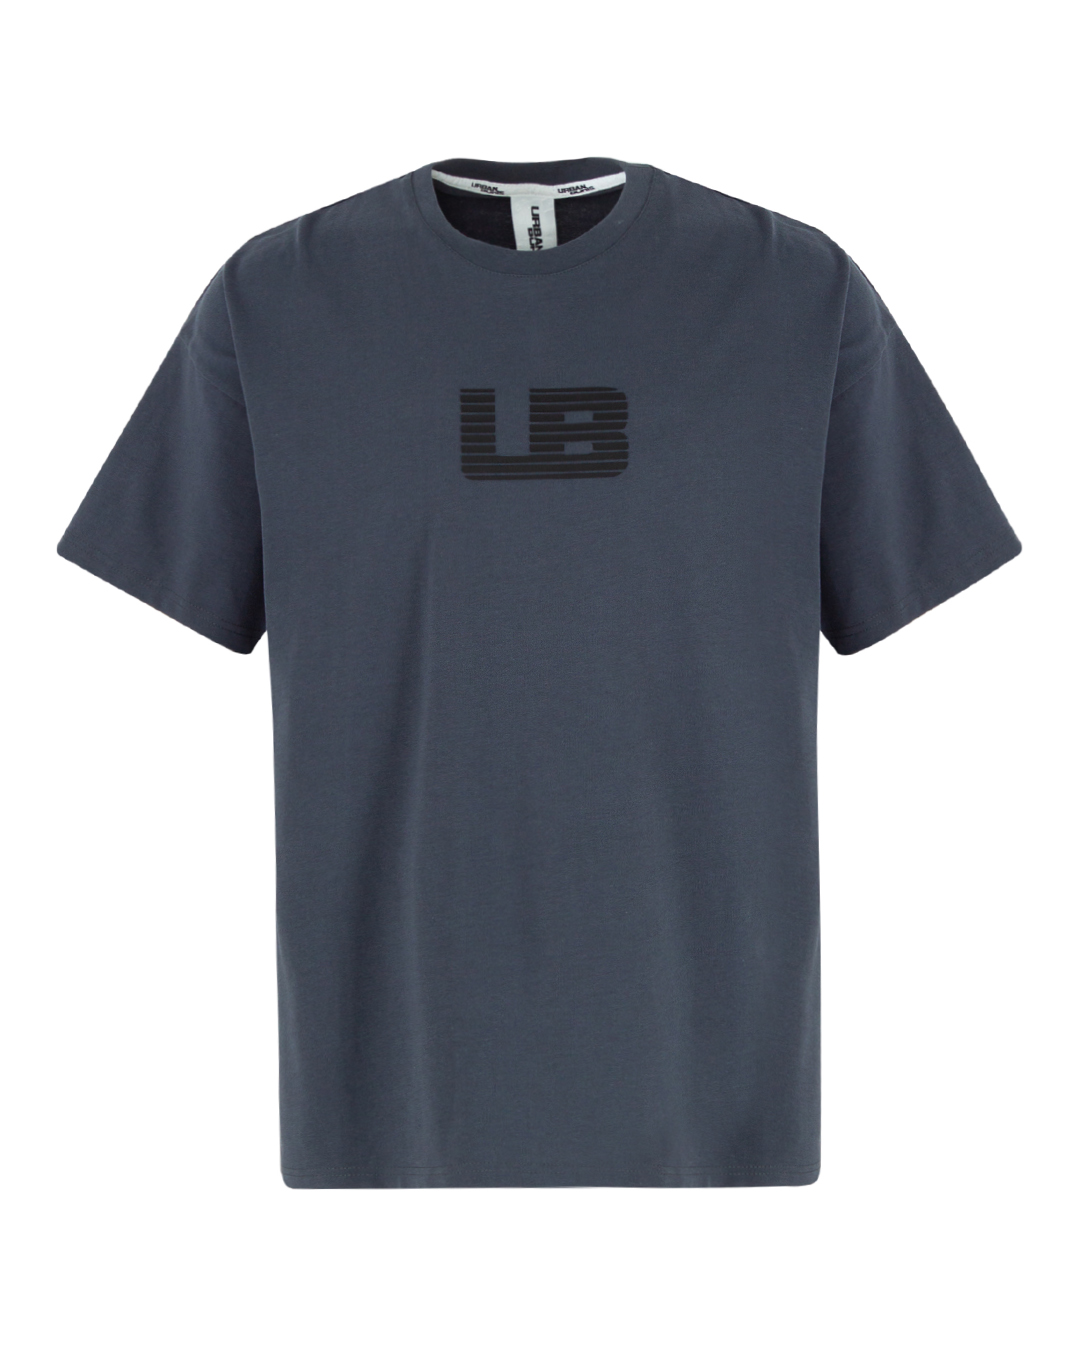 URBAN BORIS с логотипом бренда  артикул  марки URBAN BORIS купить за 12900 руб.